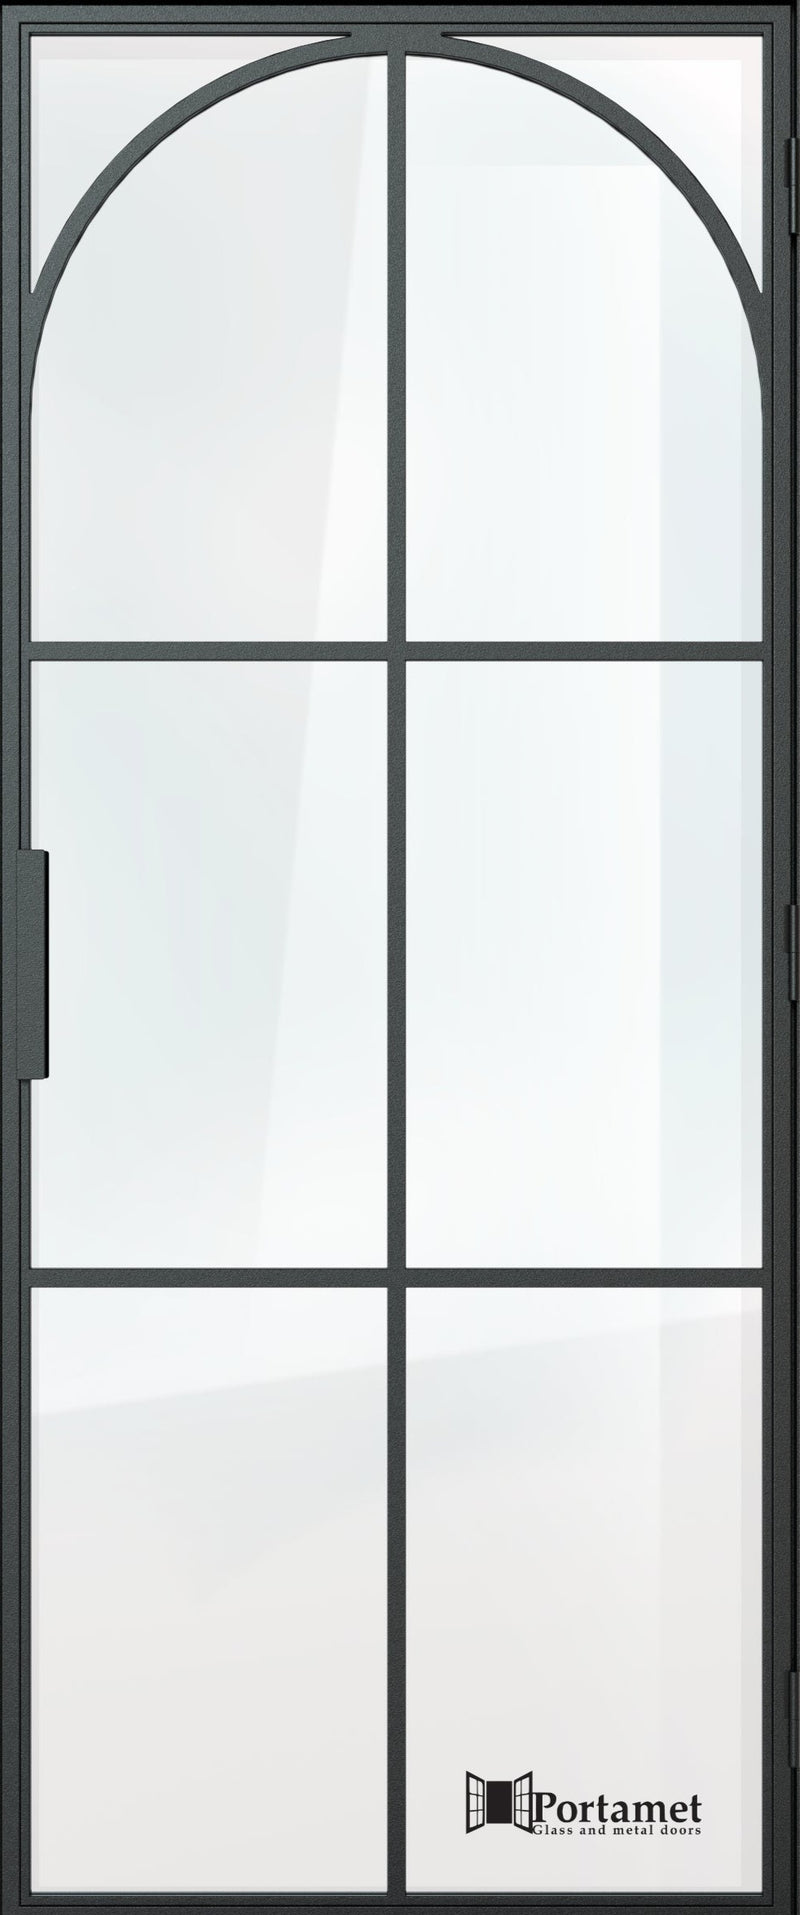 Portamet by Sfarzo - Sol Classic Single Glazed Steel Hinged Door with Frame